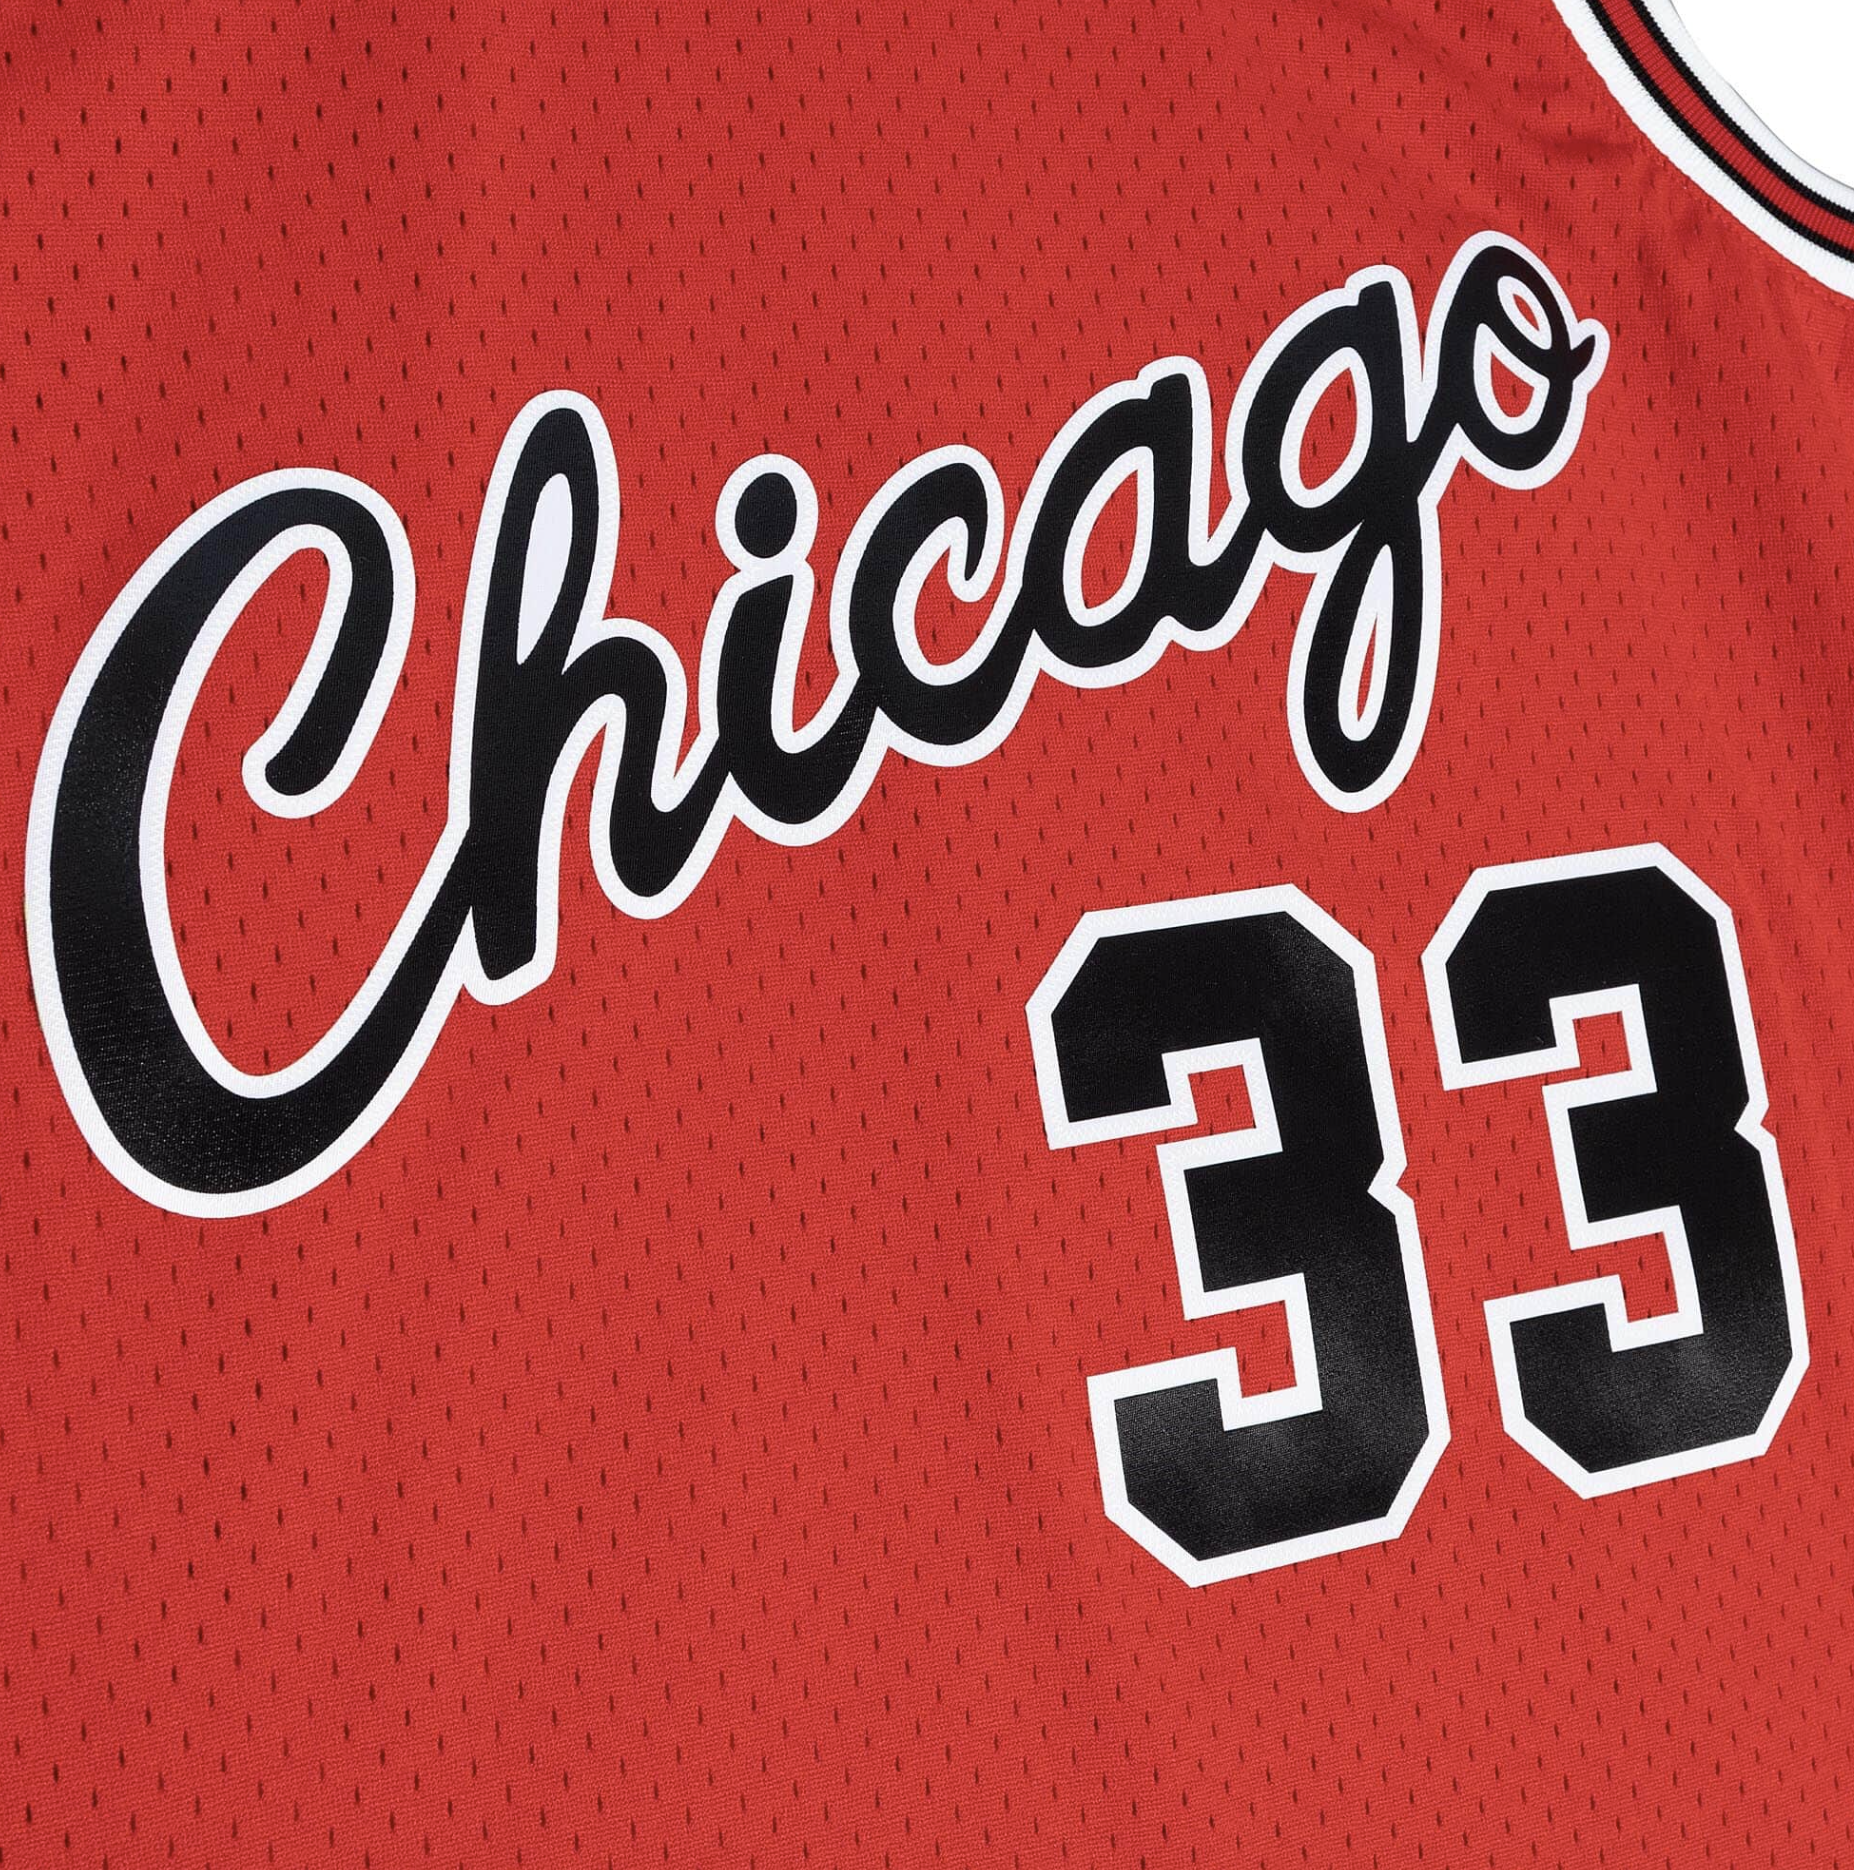 Chicago Bulls Alternate Uniform